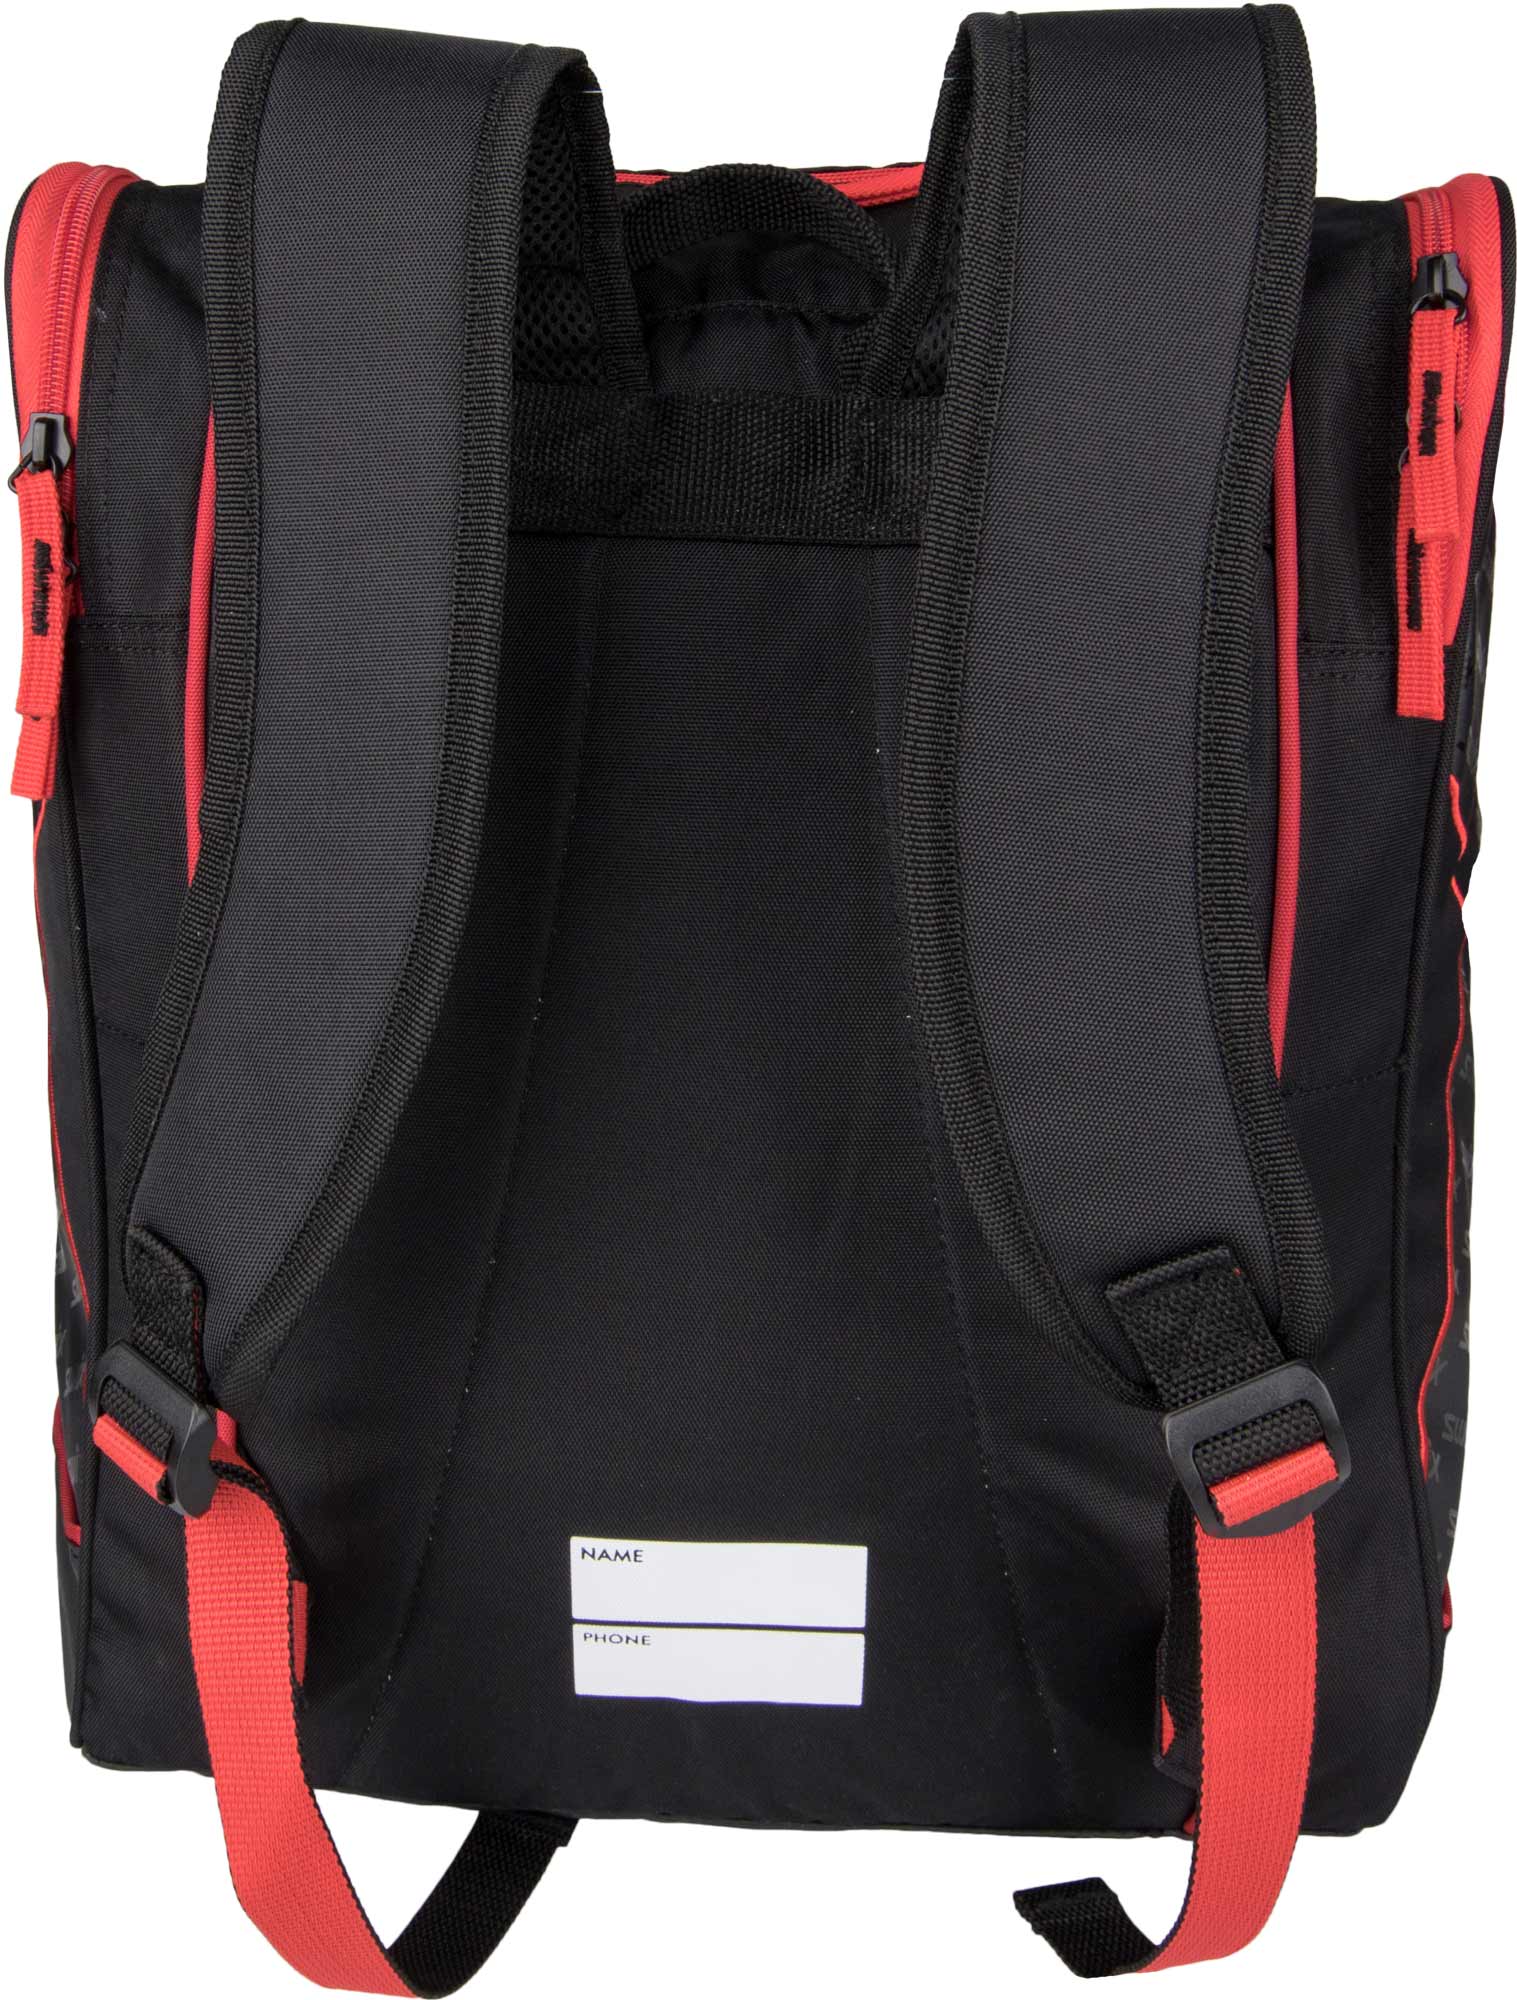 Skiing gear backpack